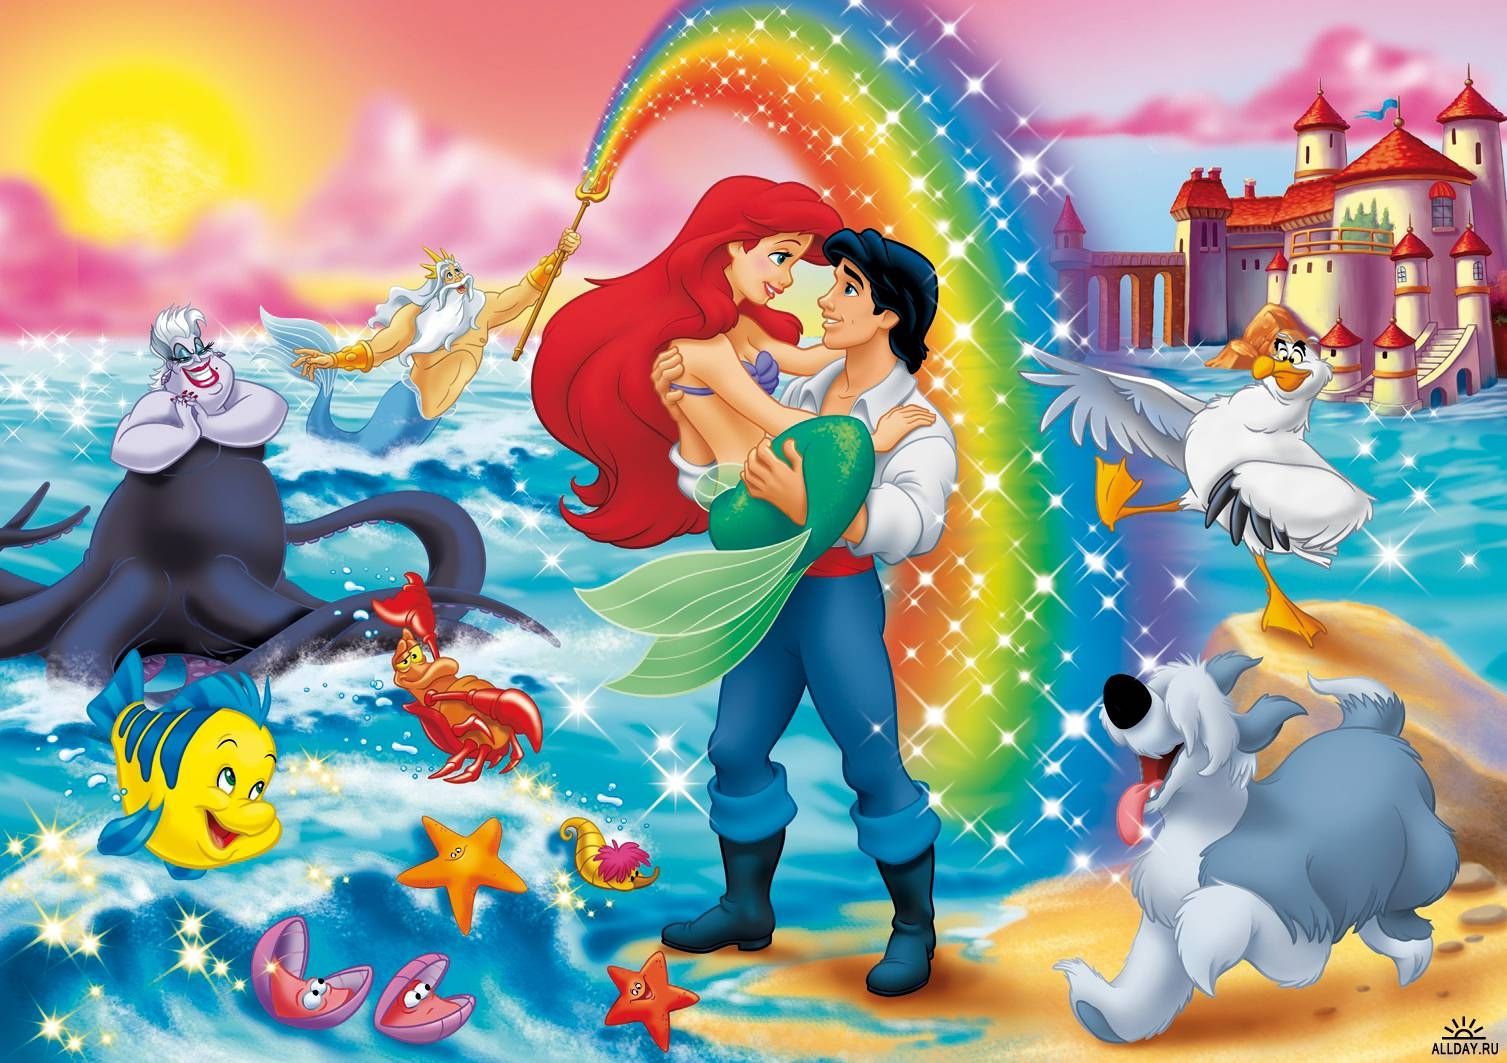 Little Mermaid Princess Ariel wallpaper hd free download